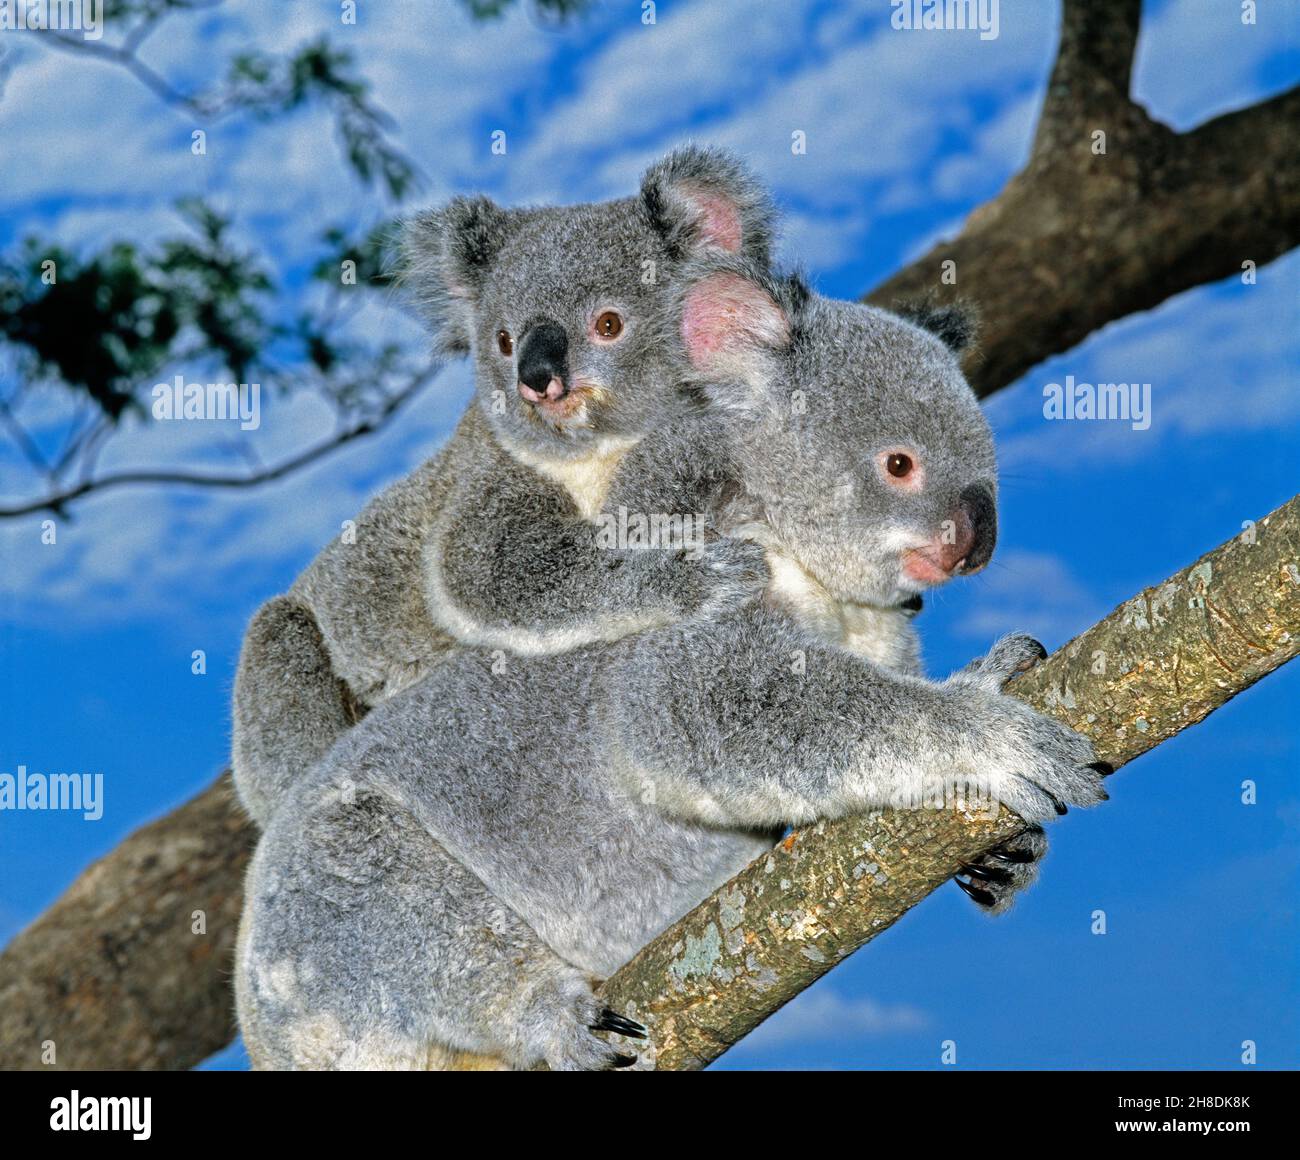 Australia. Vida salvaje. Koalas madre y bebé. Fascolarcos cinereus. Foto de stock